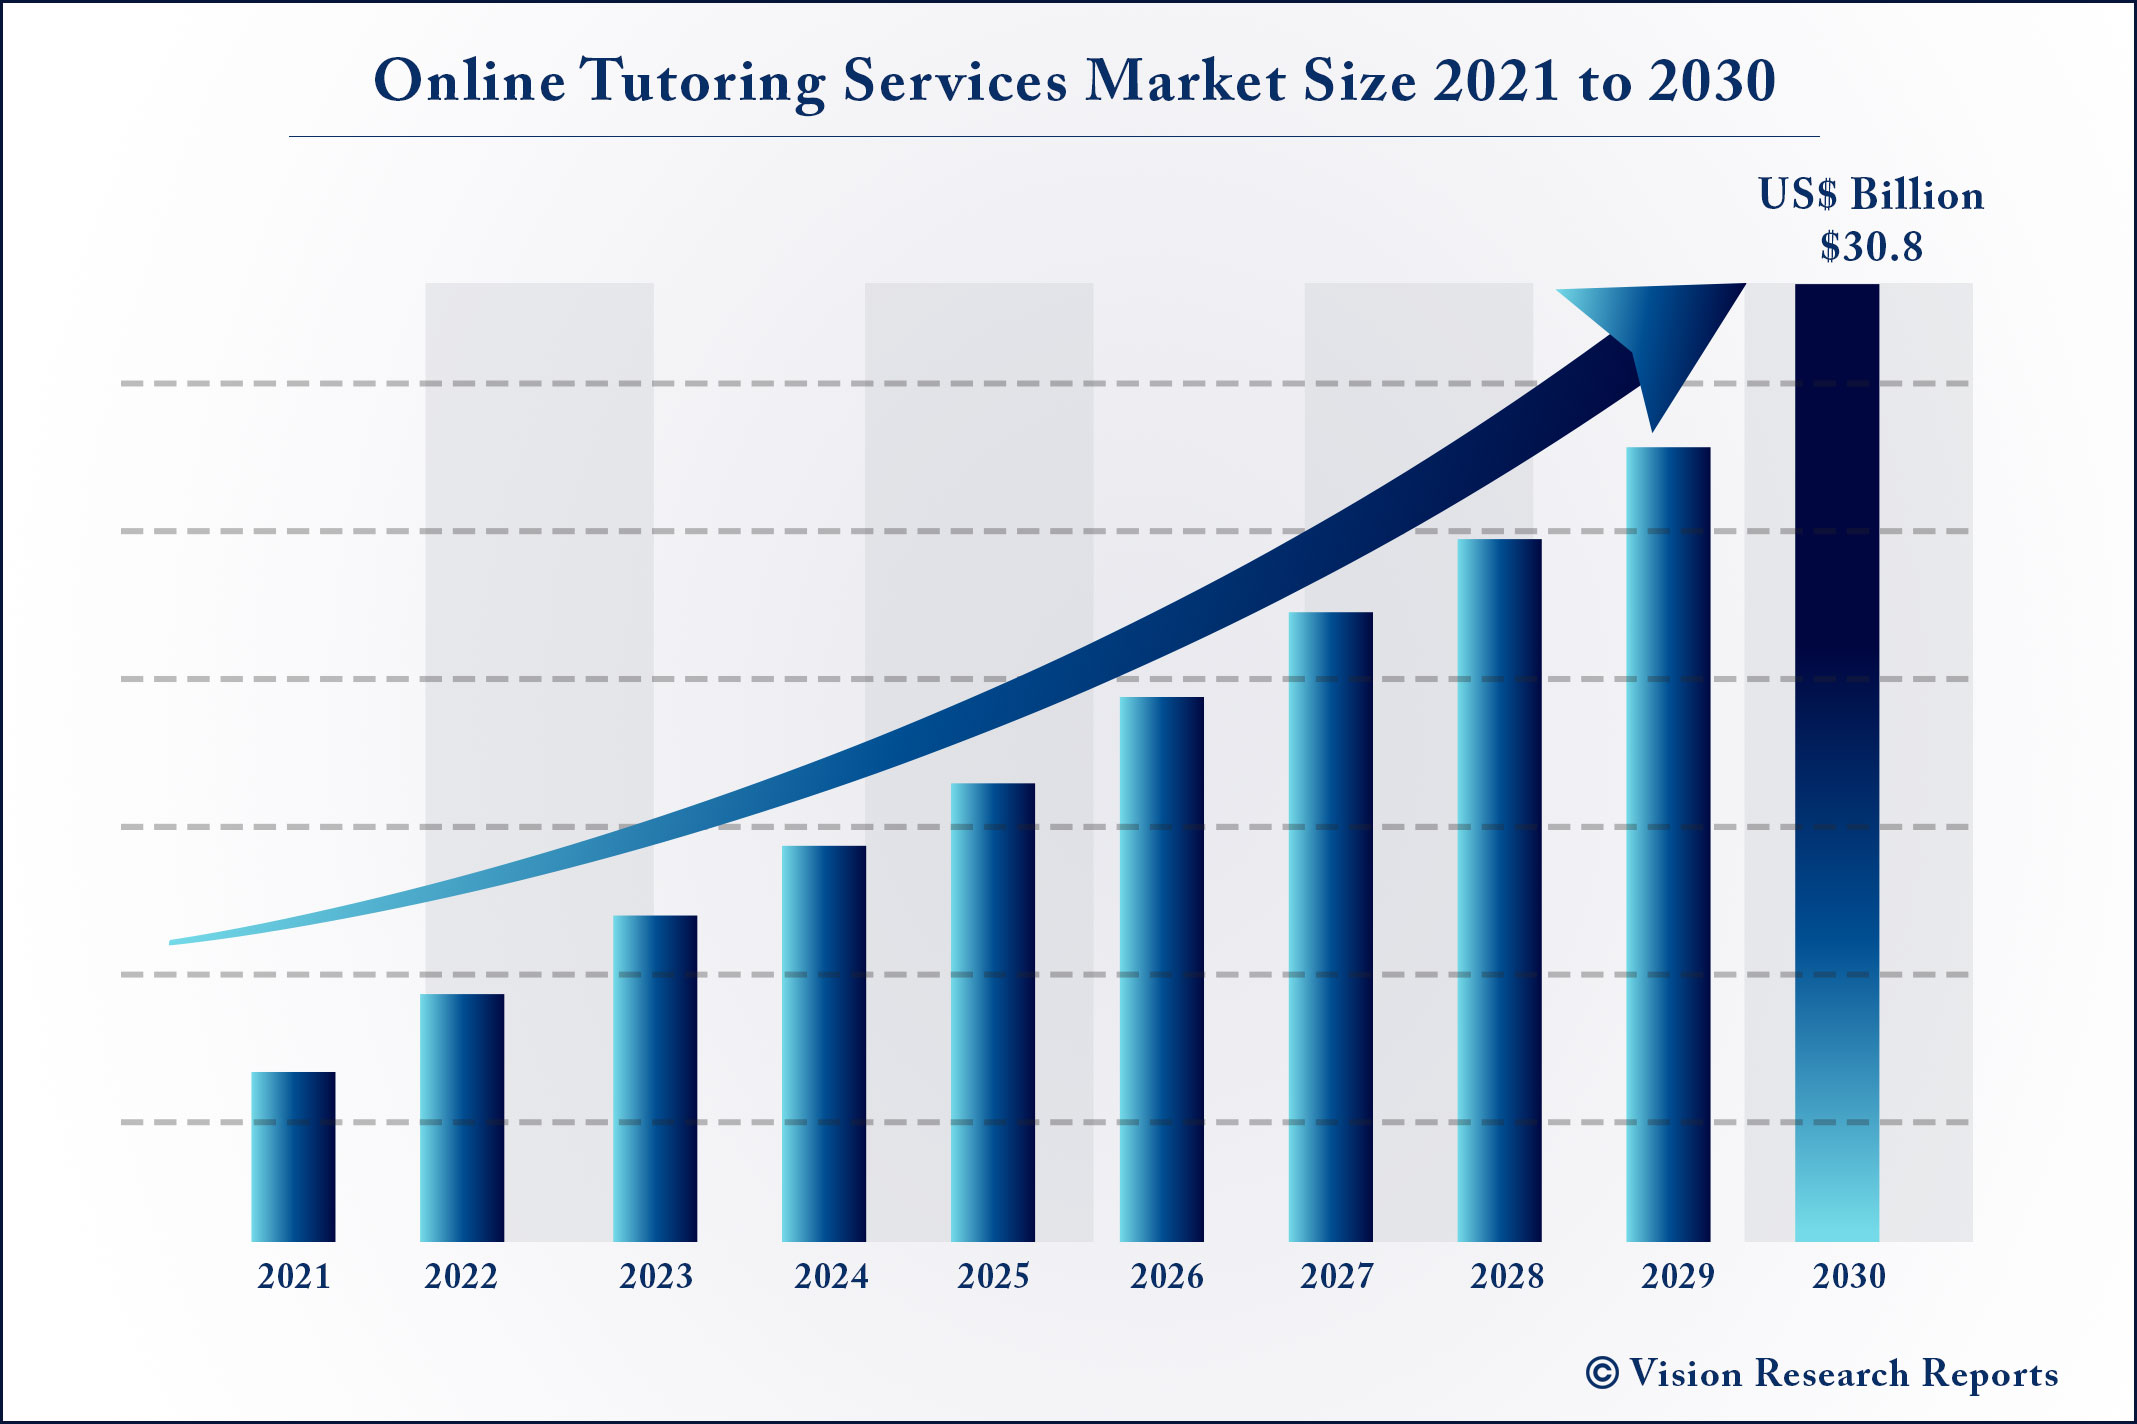 Online Video Platform Market Size 2021 to 2030